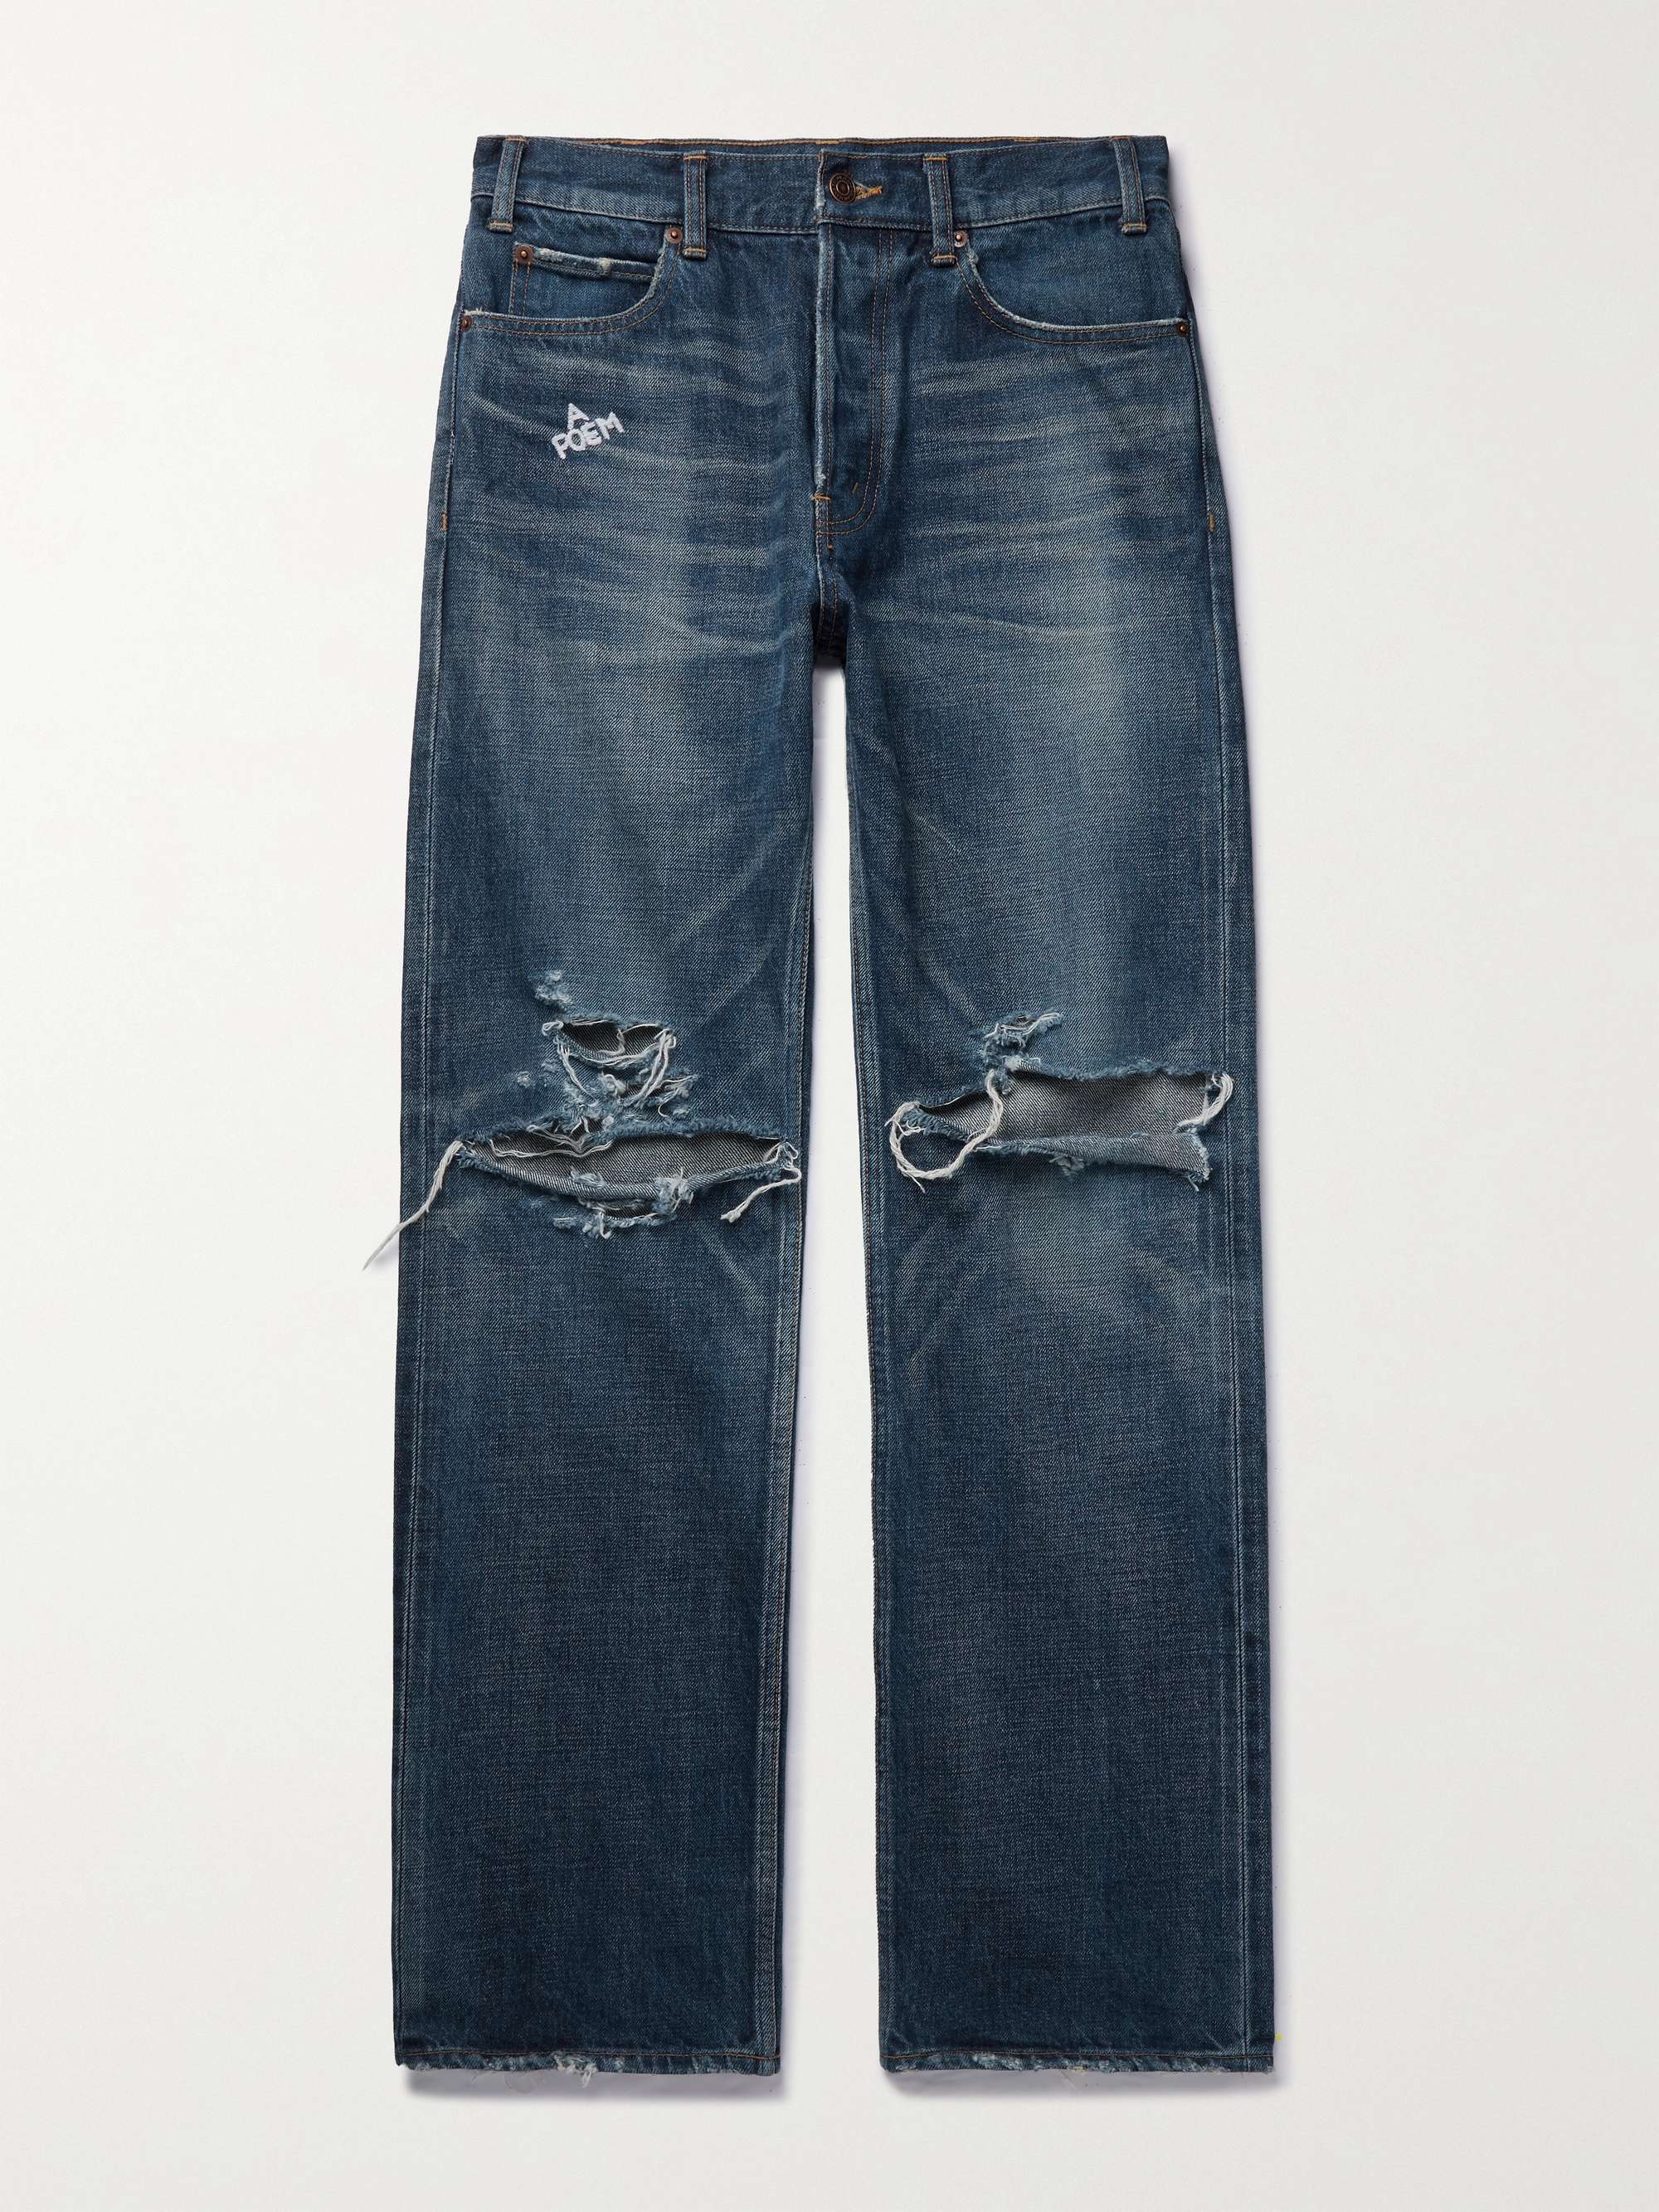 Kurt Distressed Selvedge Jeans